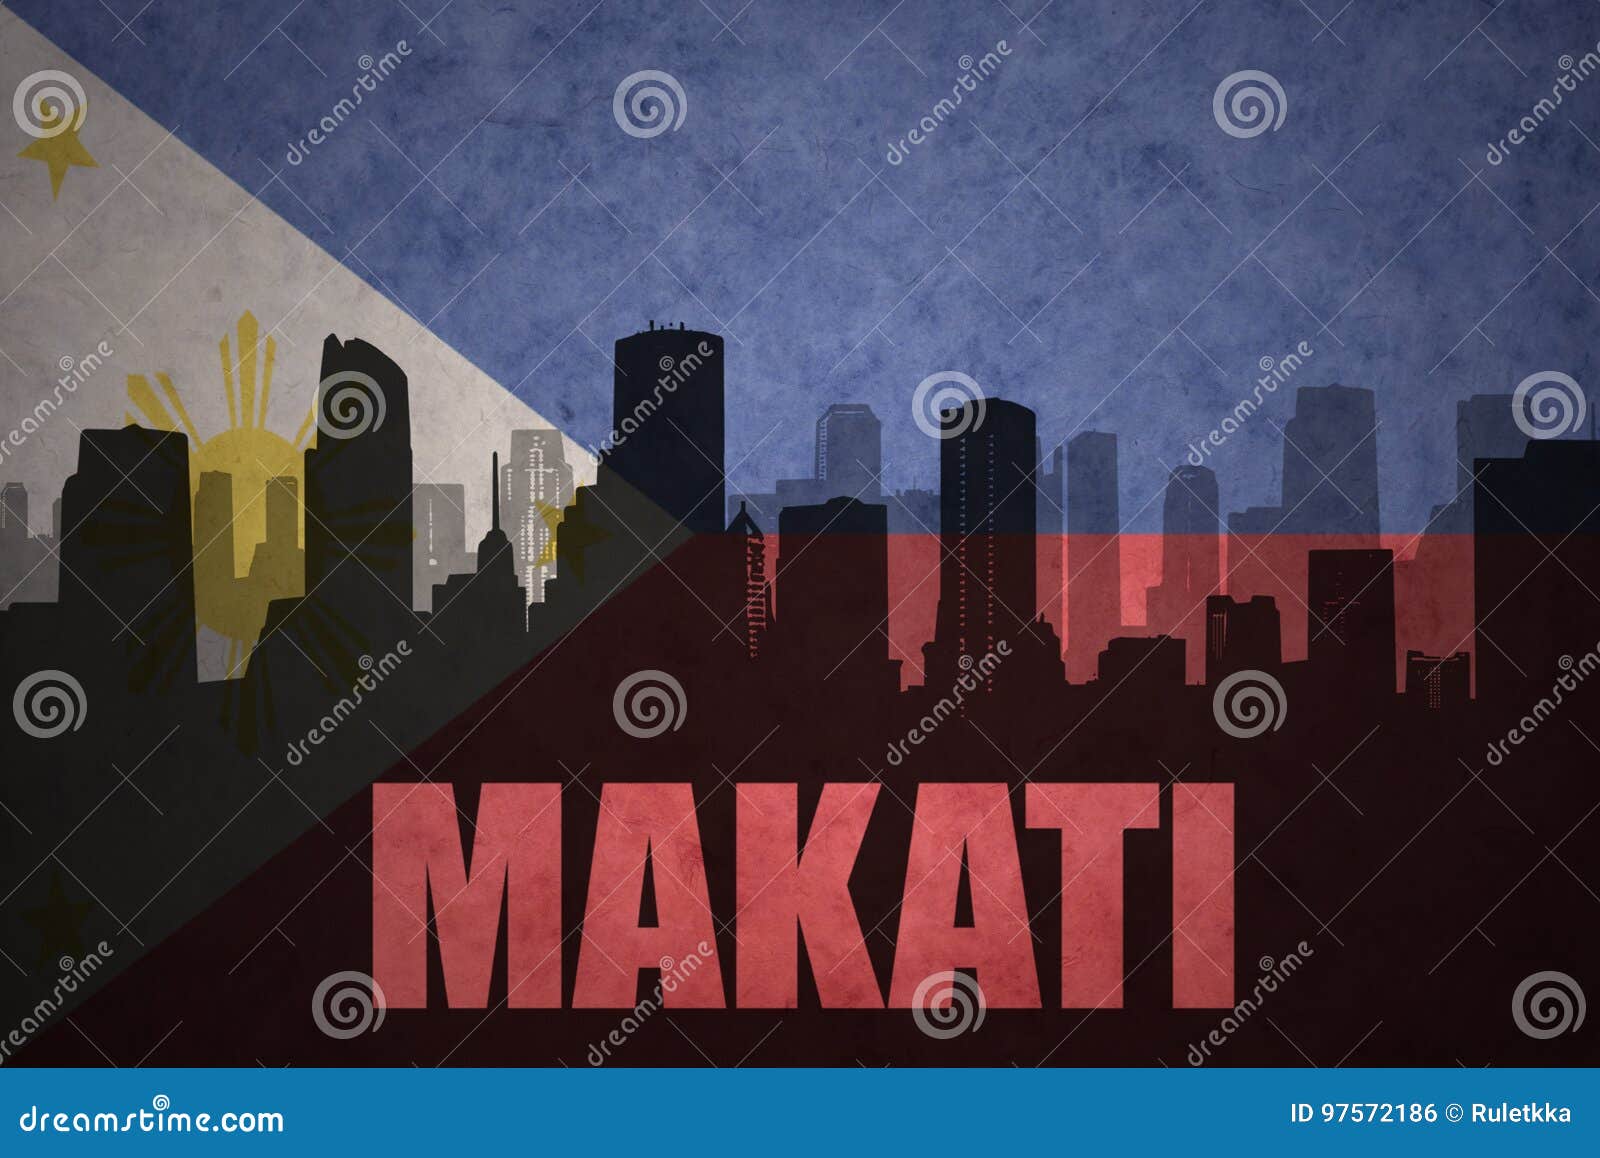 SKU 1001 Makati skyline in watercolor background